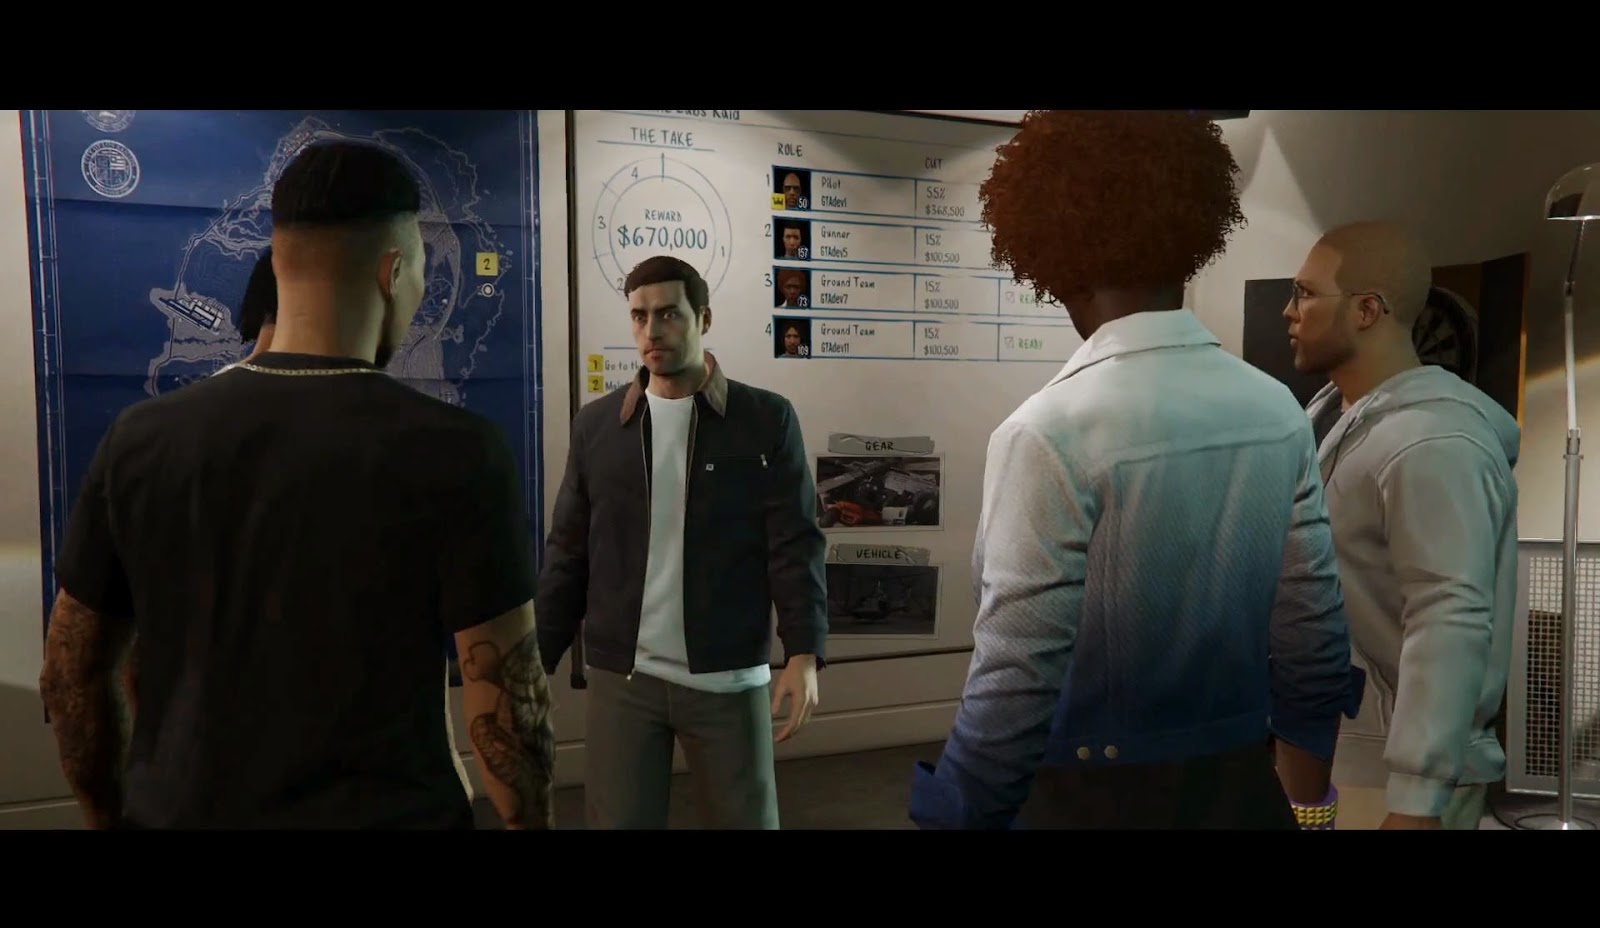 Grand Theft Auto Online – Heists Trailer 